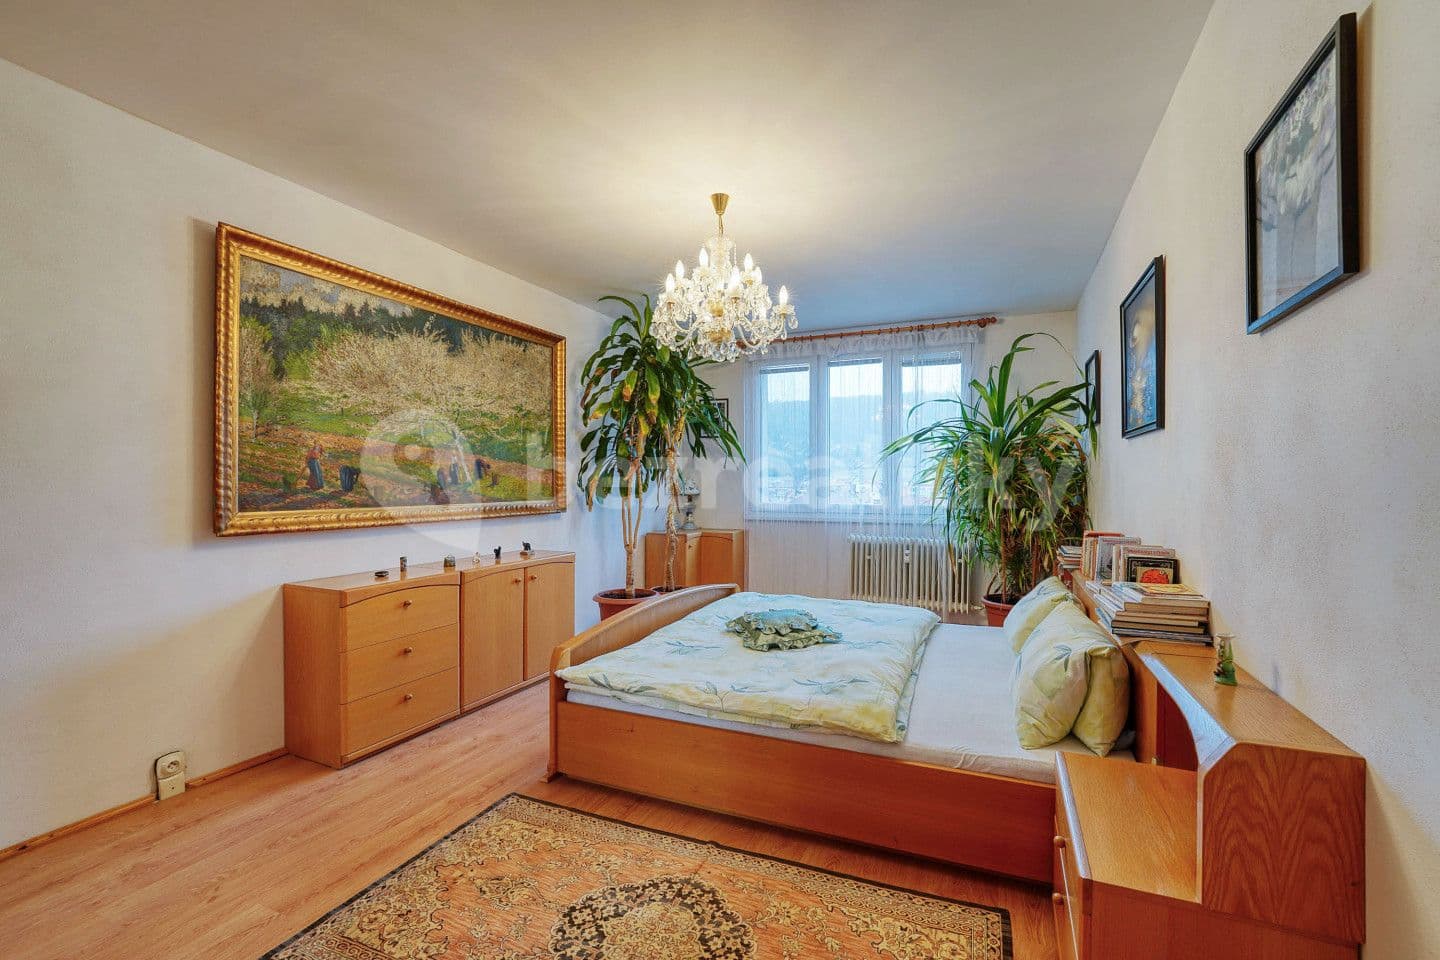 2 bedroom flat for sale, 65 m², Sirkařská, Sušice, Plzeňský Region